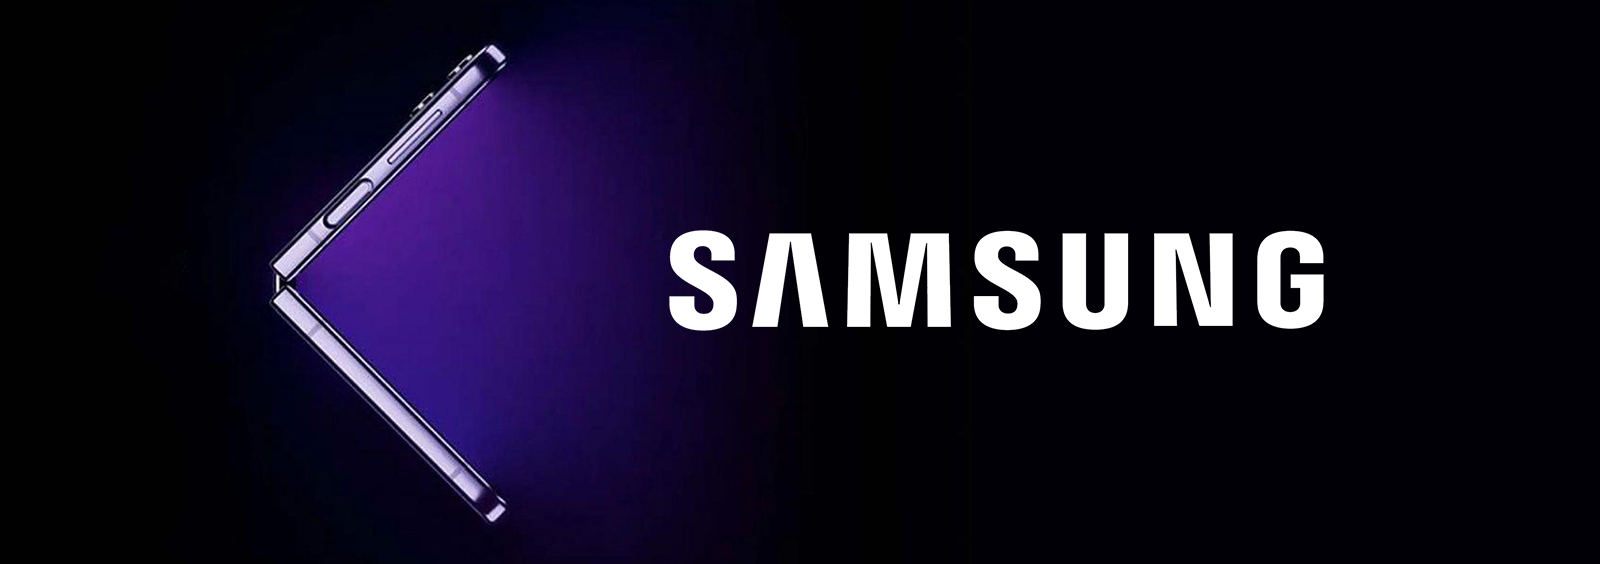 Samsung - Samsung